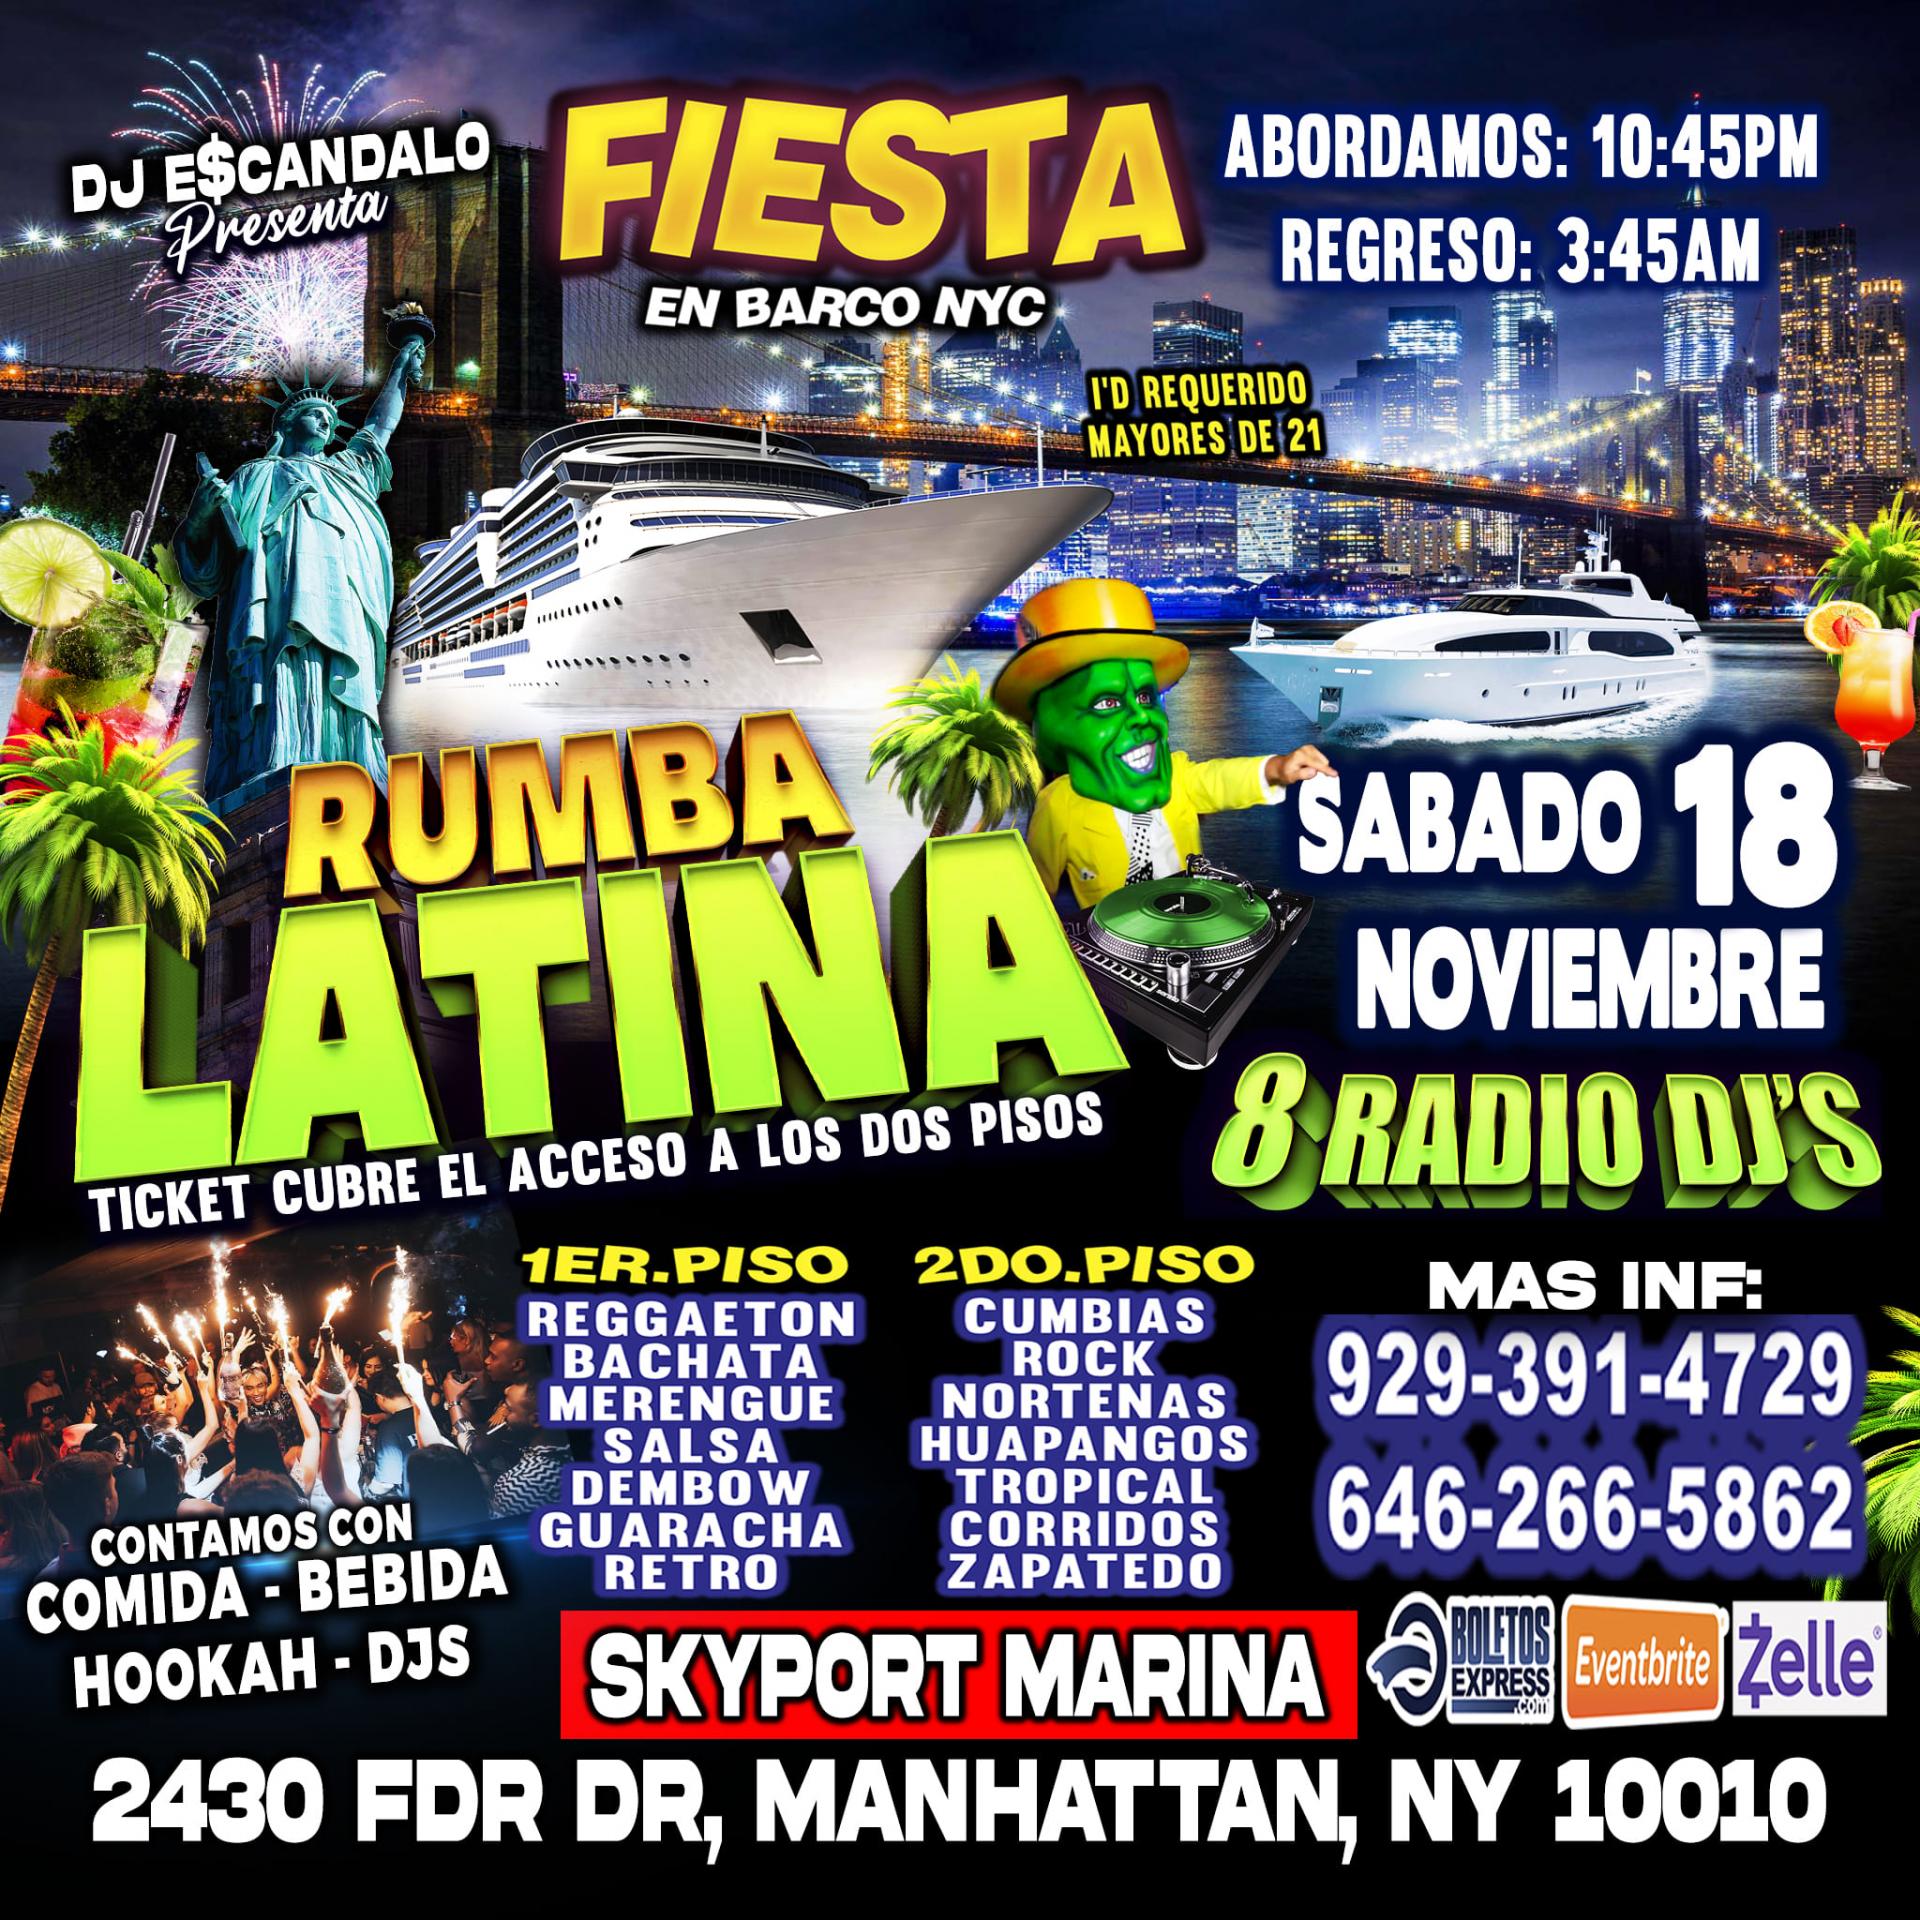 Sabado 18 Noviembre - Rumba Latina En Barco + Dj's